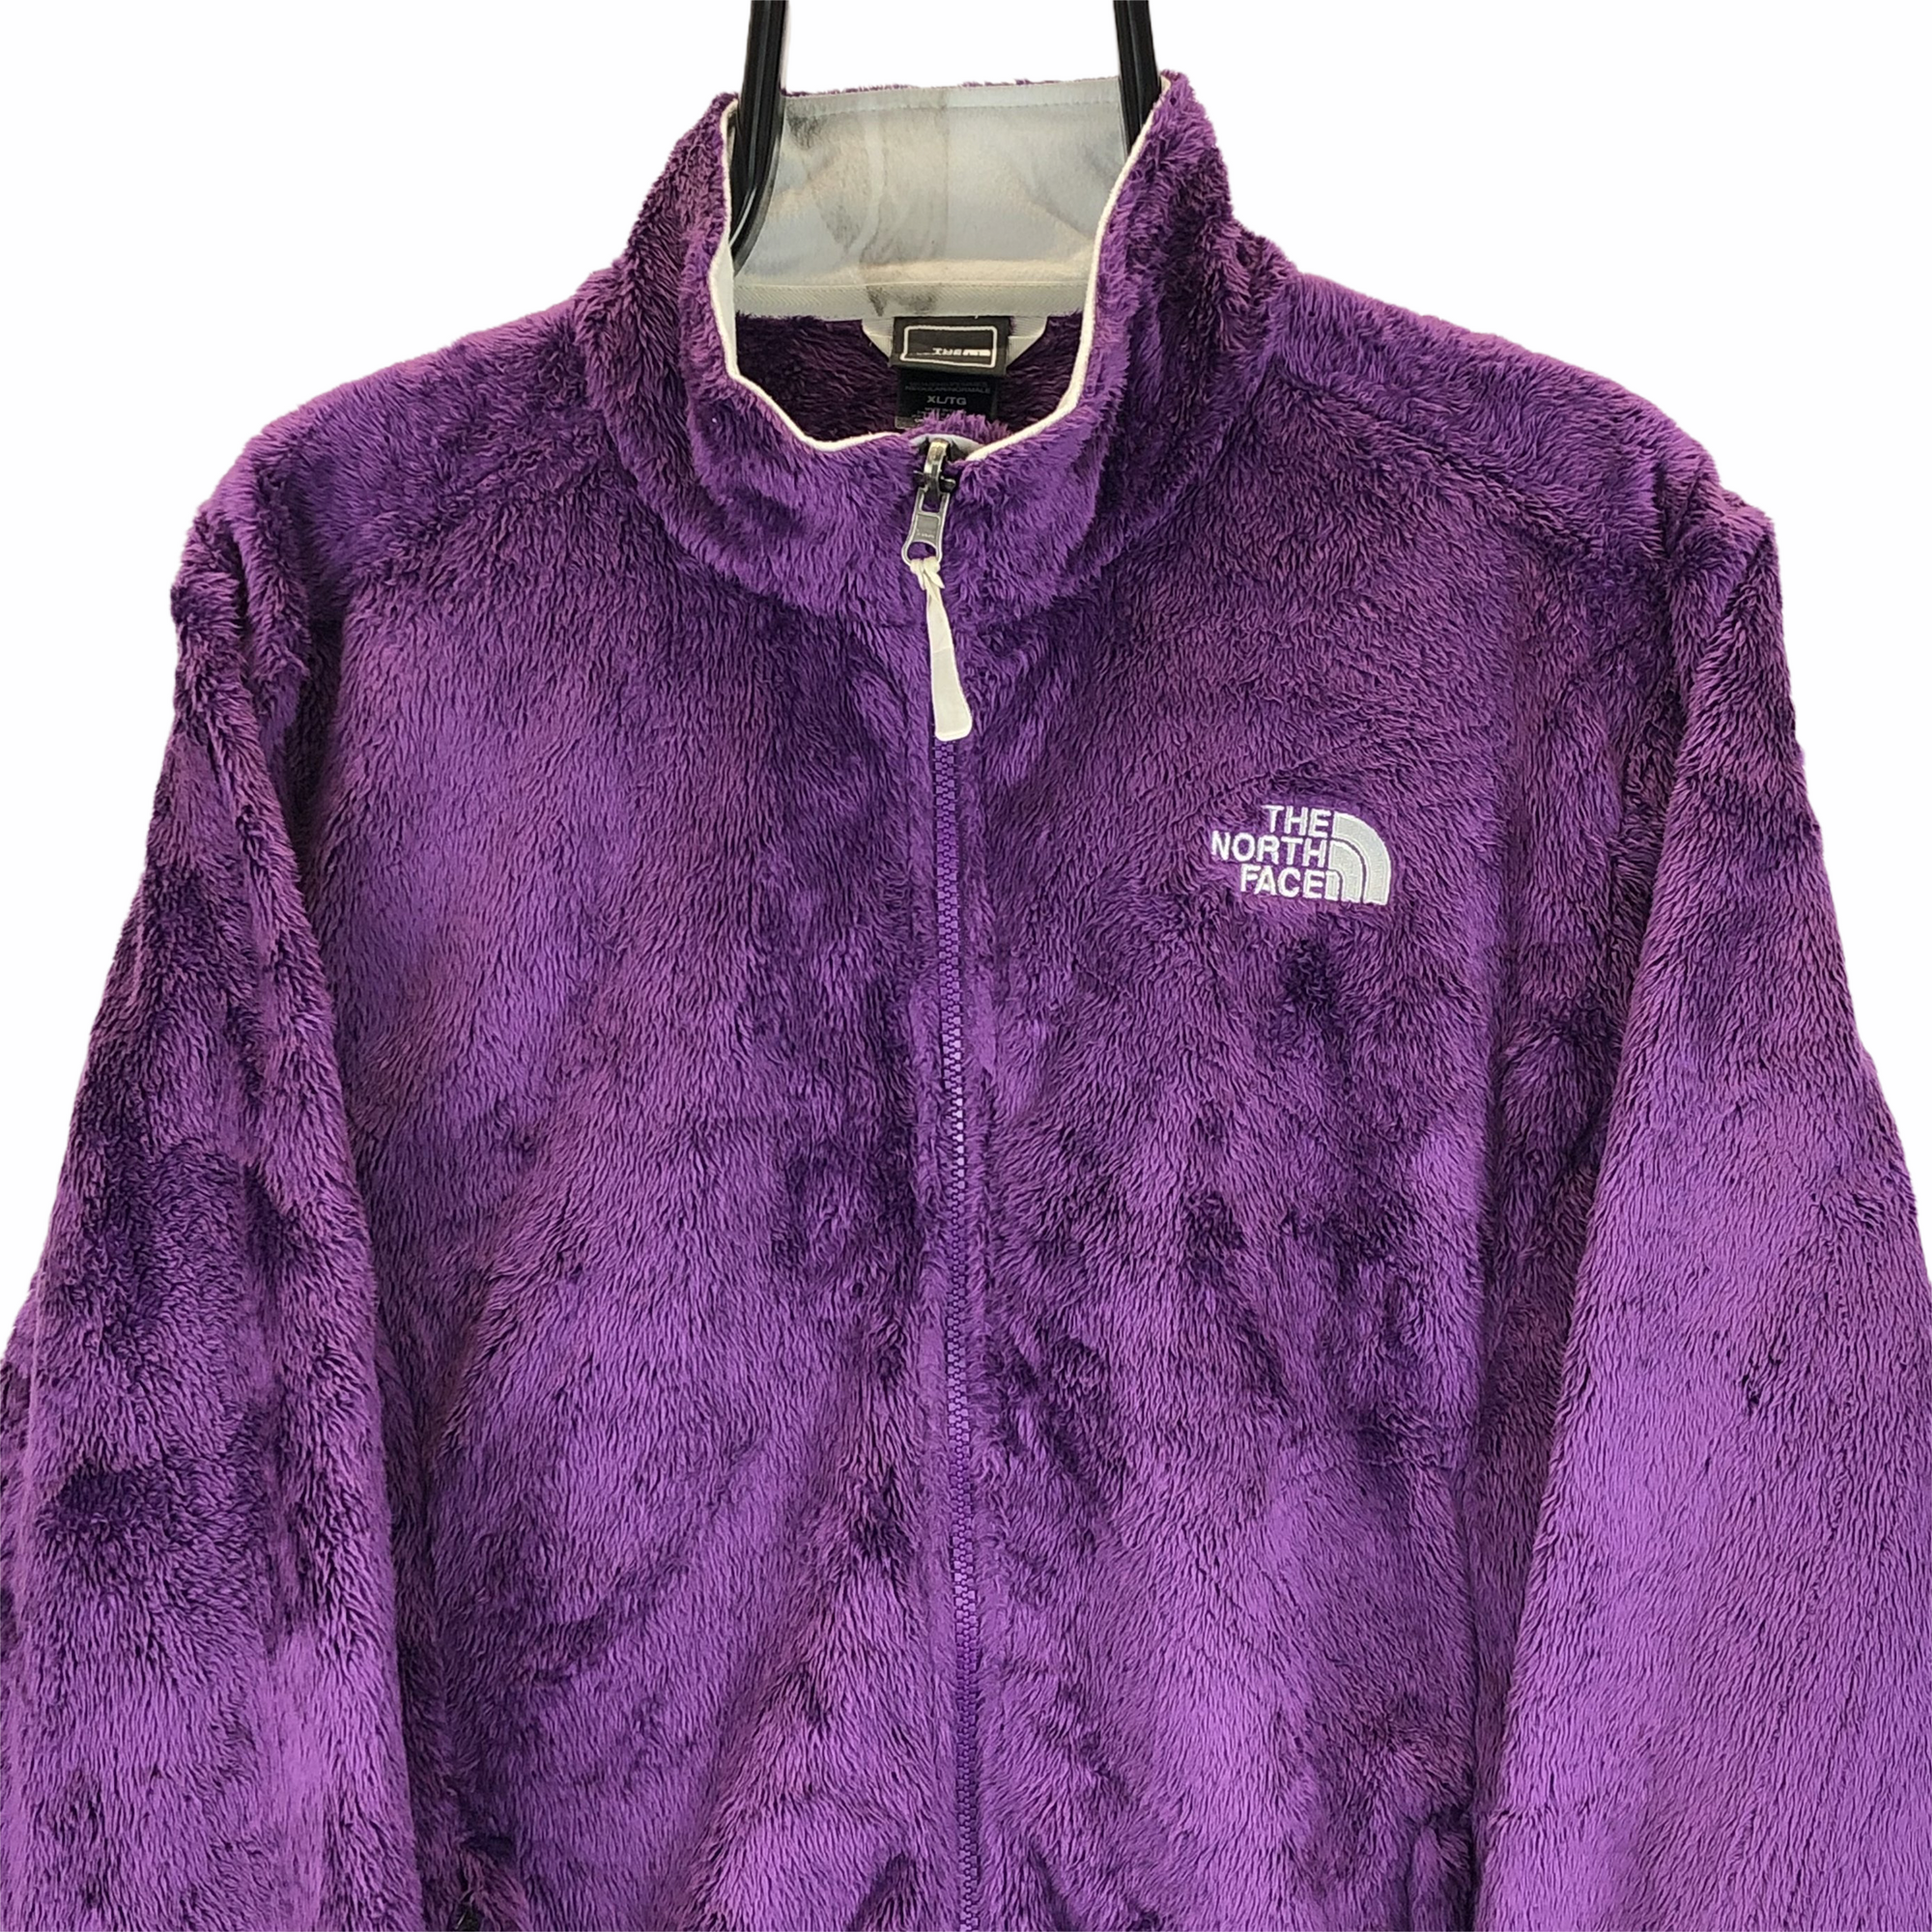 North Face Fluffy Fleece in Purple - Men's Medium/Women's Large